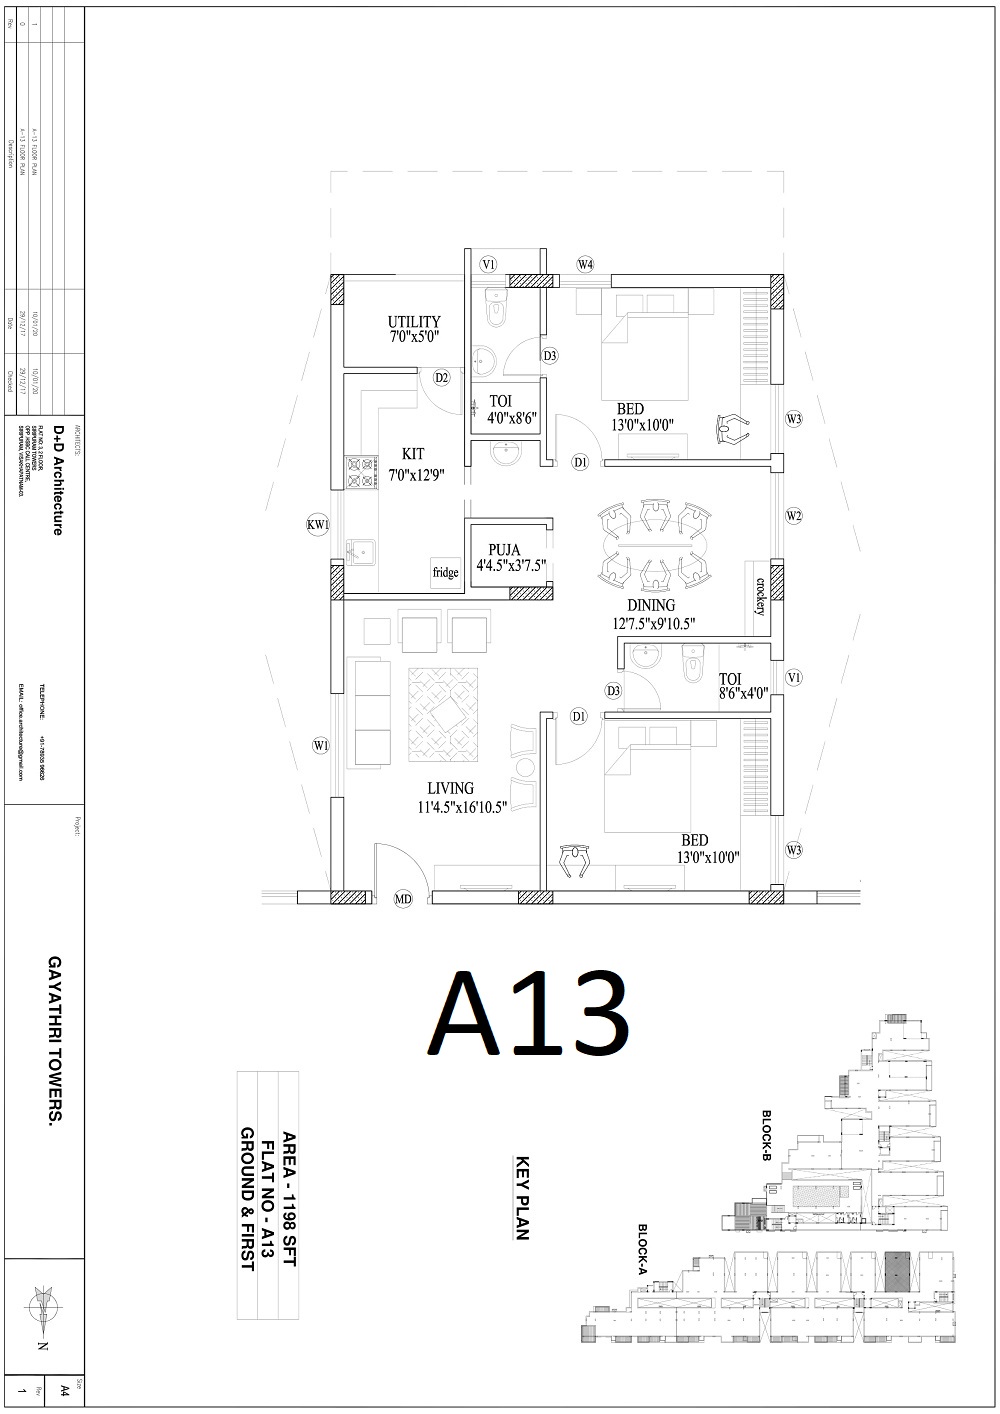 A13 - Floor Plan